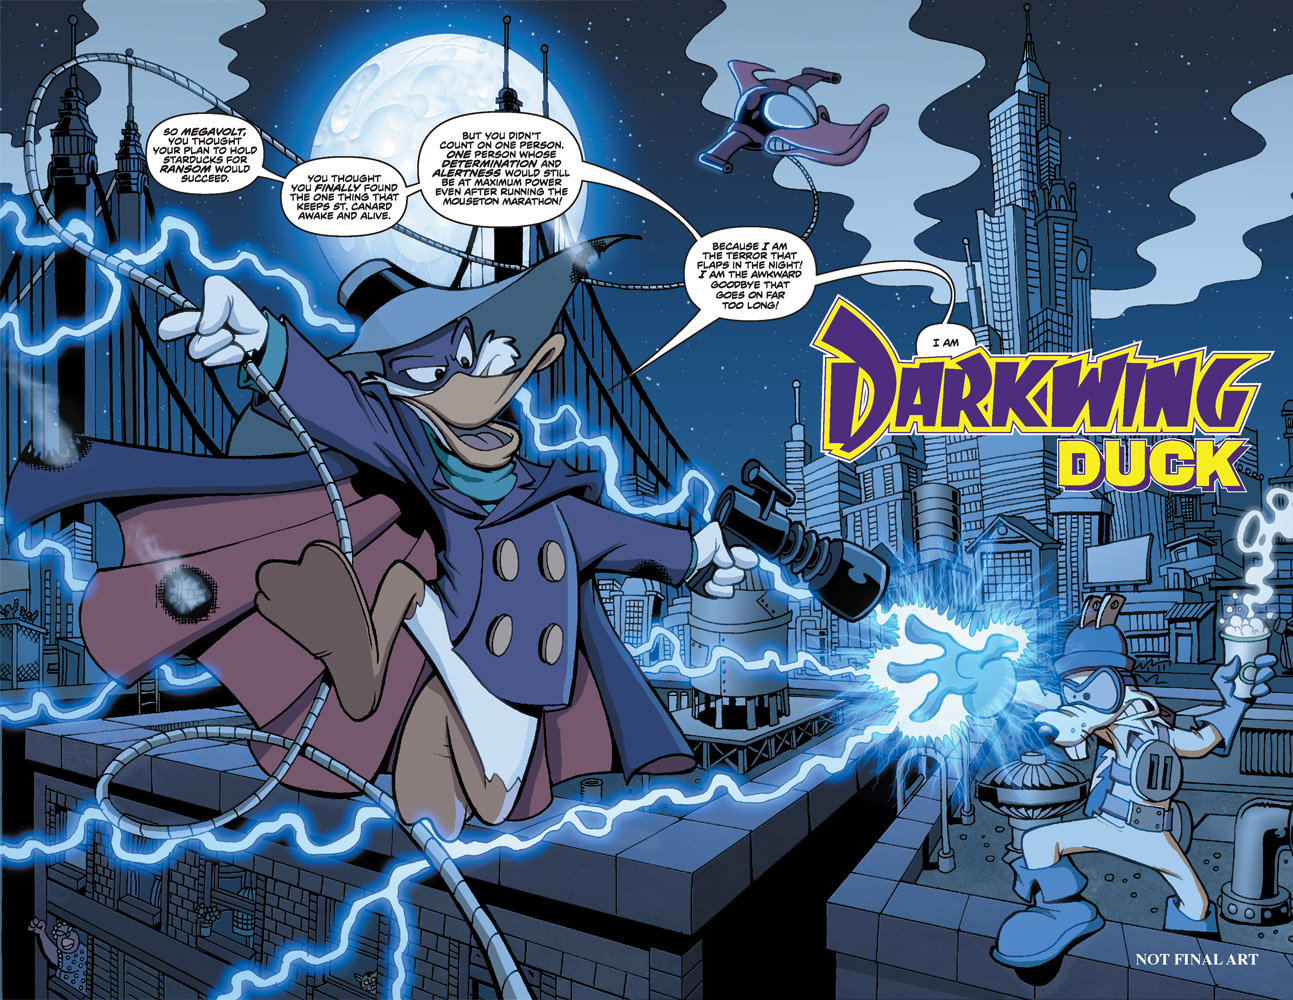 Darkwing Duck title.